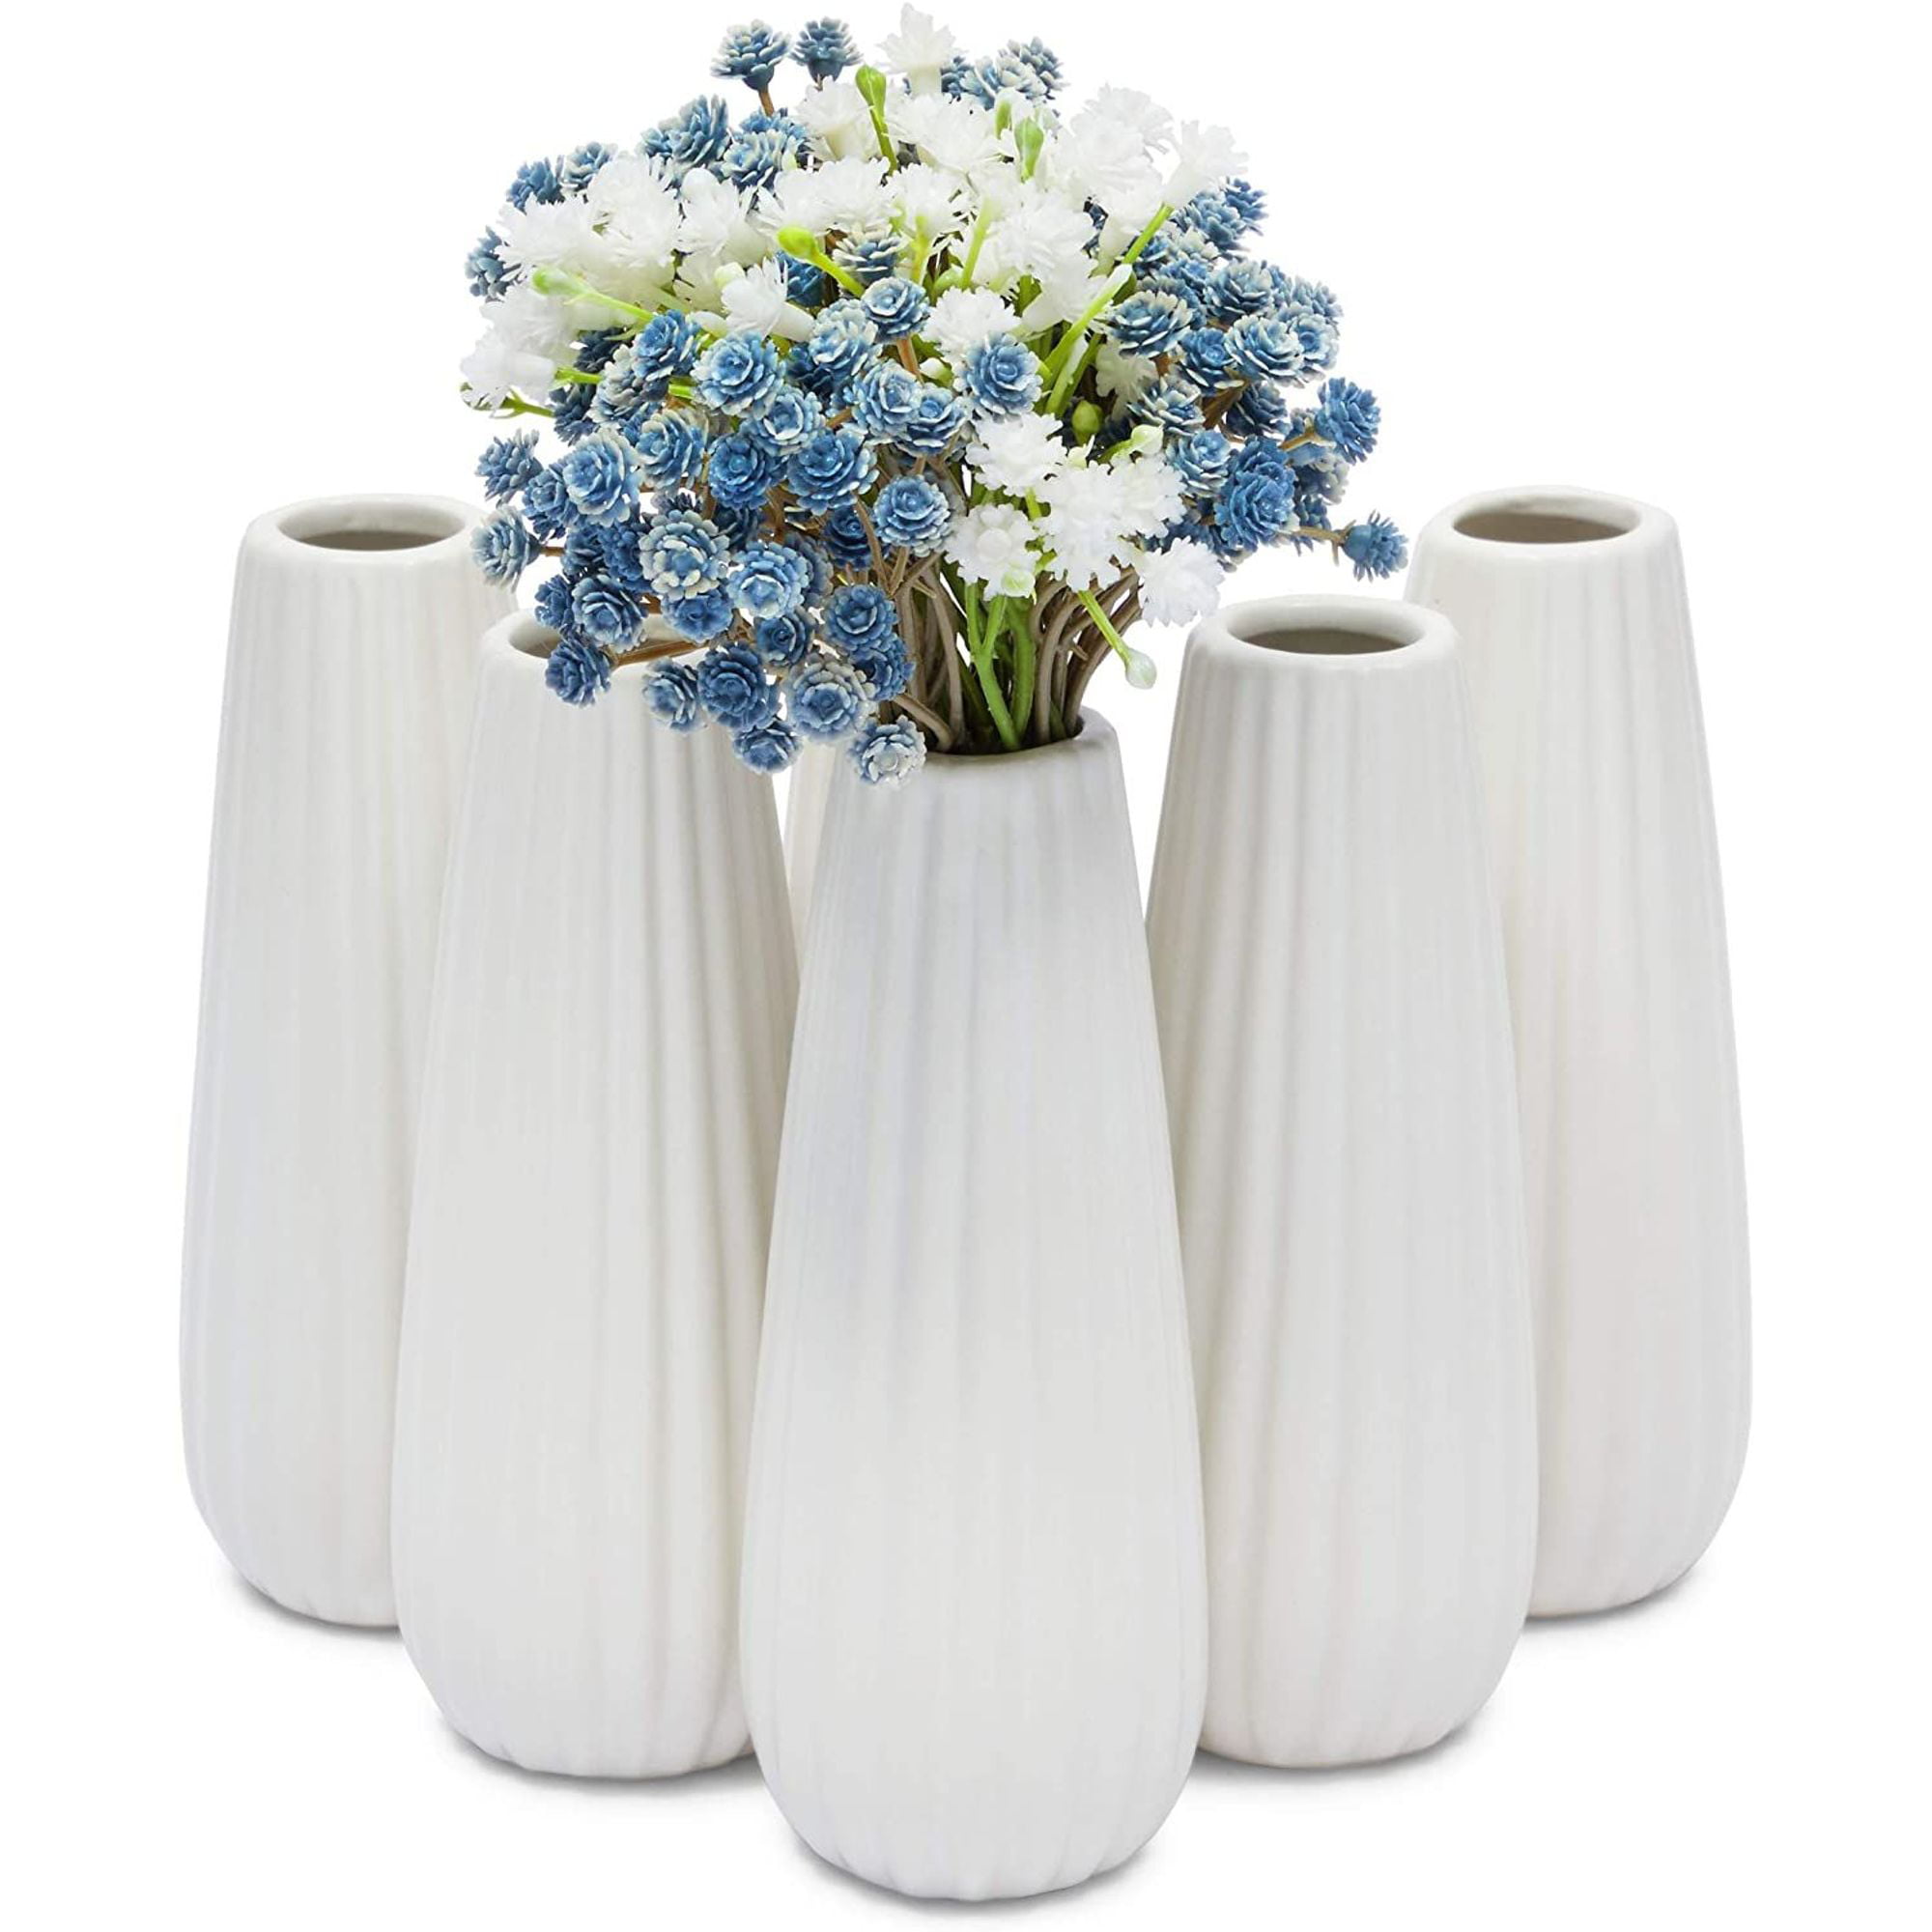 Vase Ceramic Flower Pots Plant Container Ceramic D Ceramic for Centerpieces，Decoration Flower Blue and White Porcelain Home Small Decoration Living Room Floral Decoration Craft d 